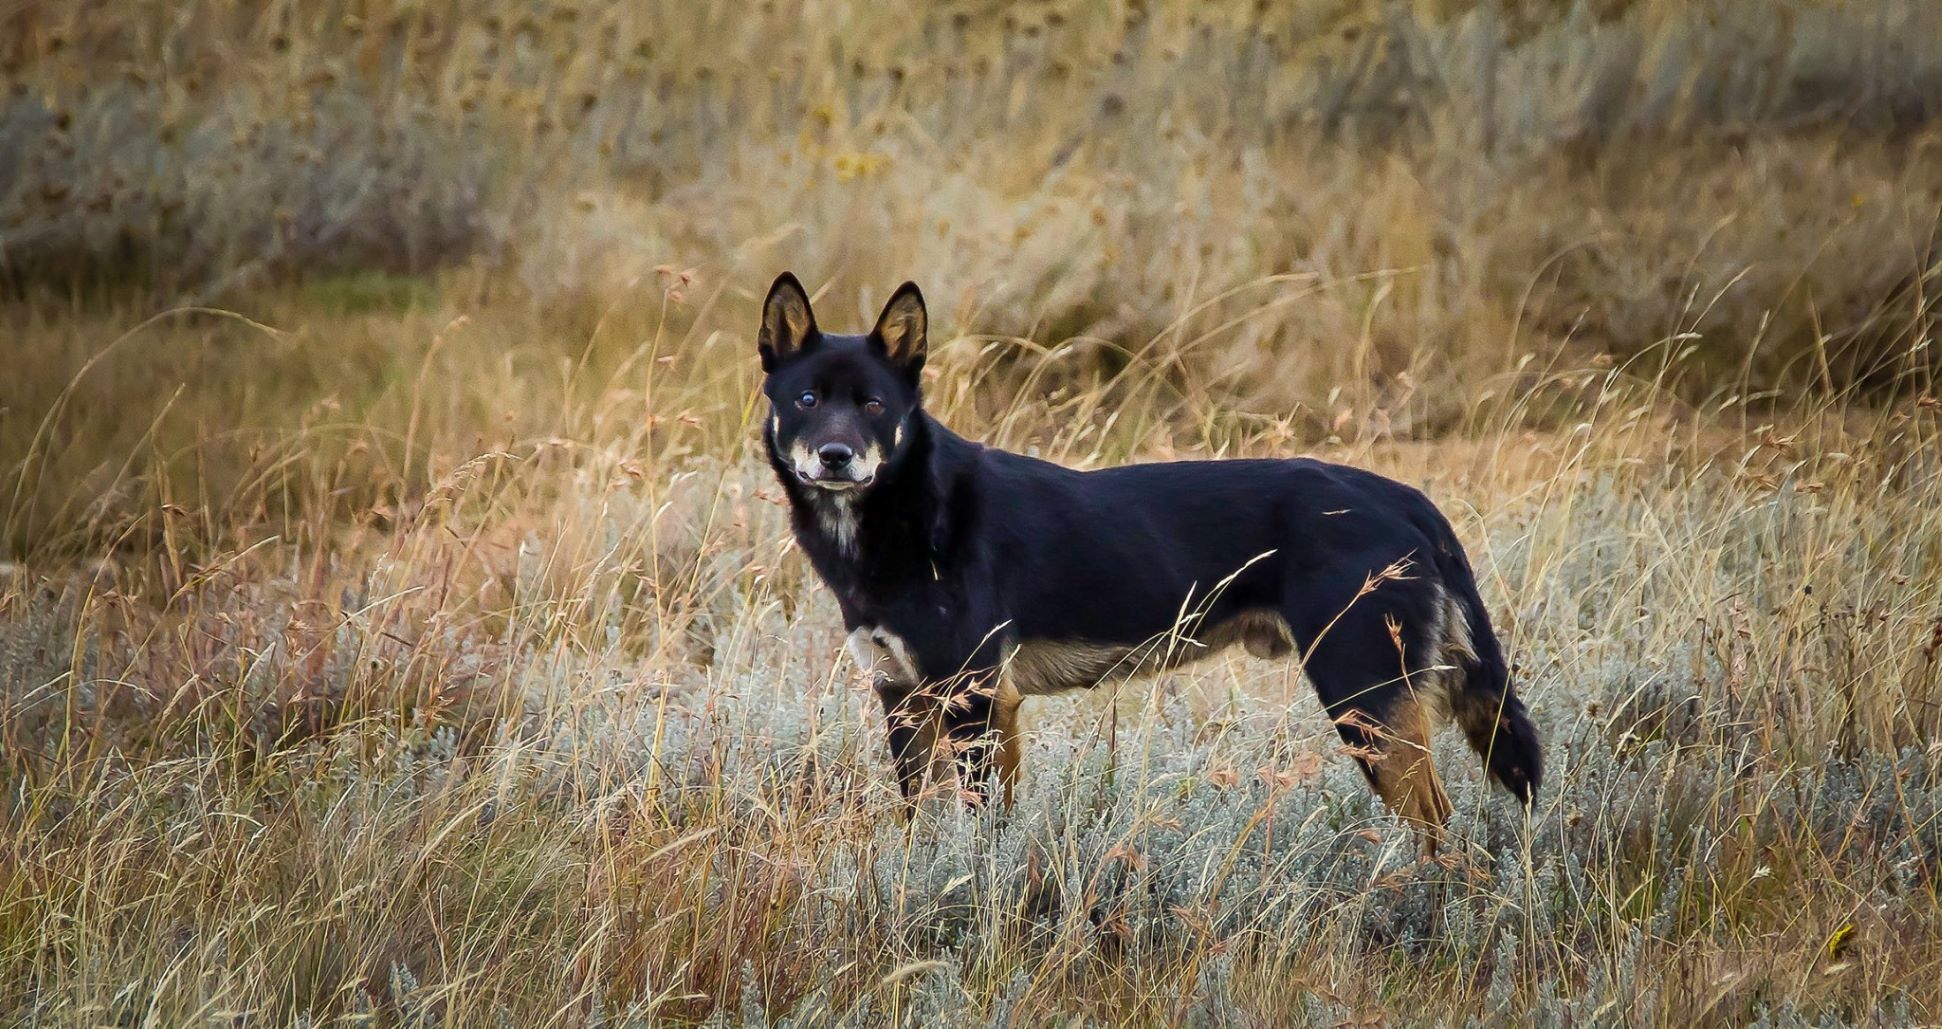 Black and tan coloured dingo